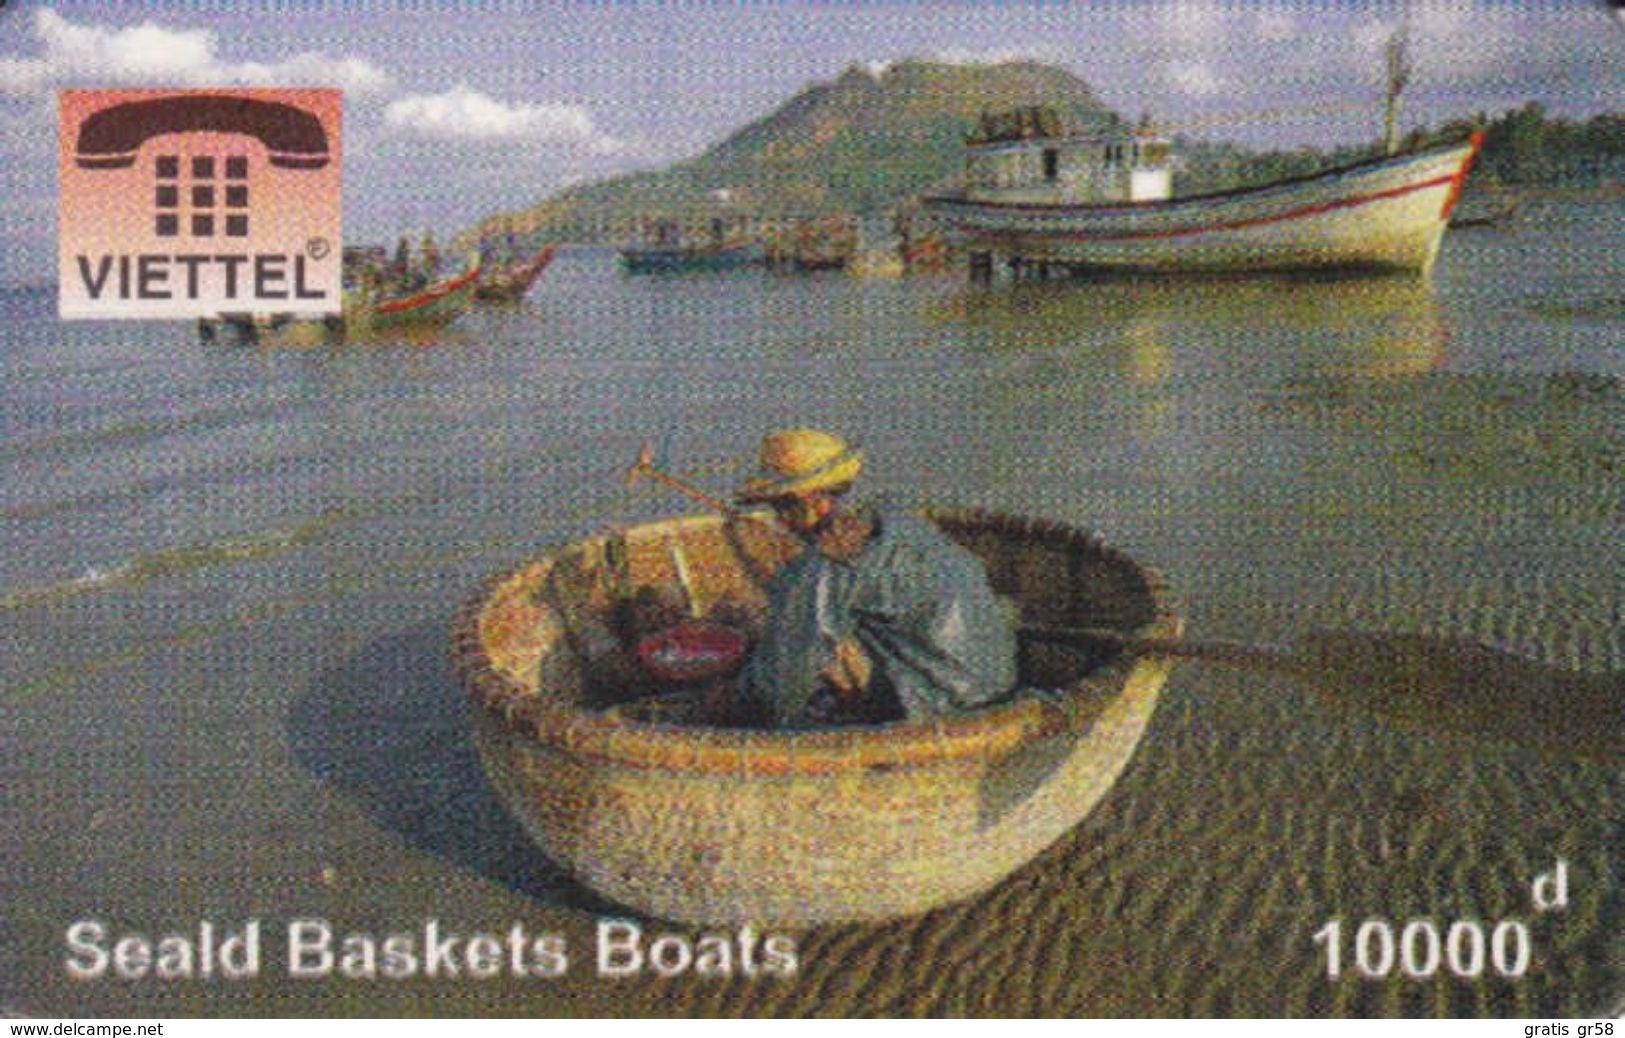 Vietnam - FAKE-VIET-1017, Viettel, Seald Baskets Boats, Fake Phonecard - Vietnam